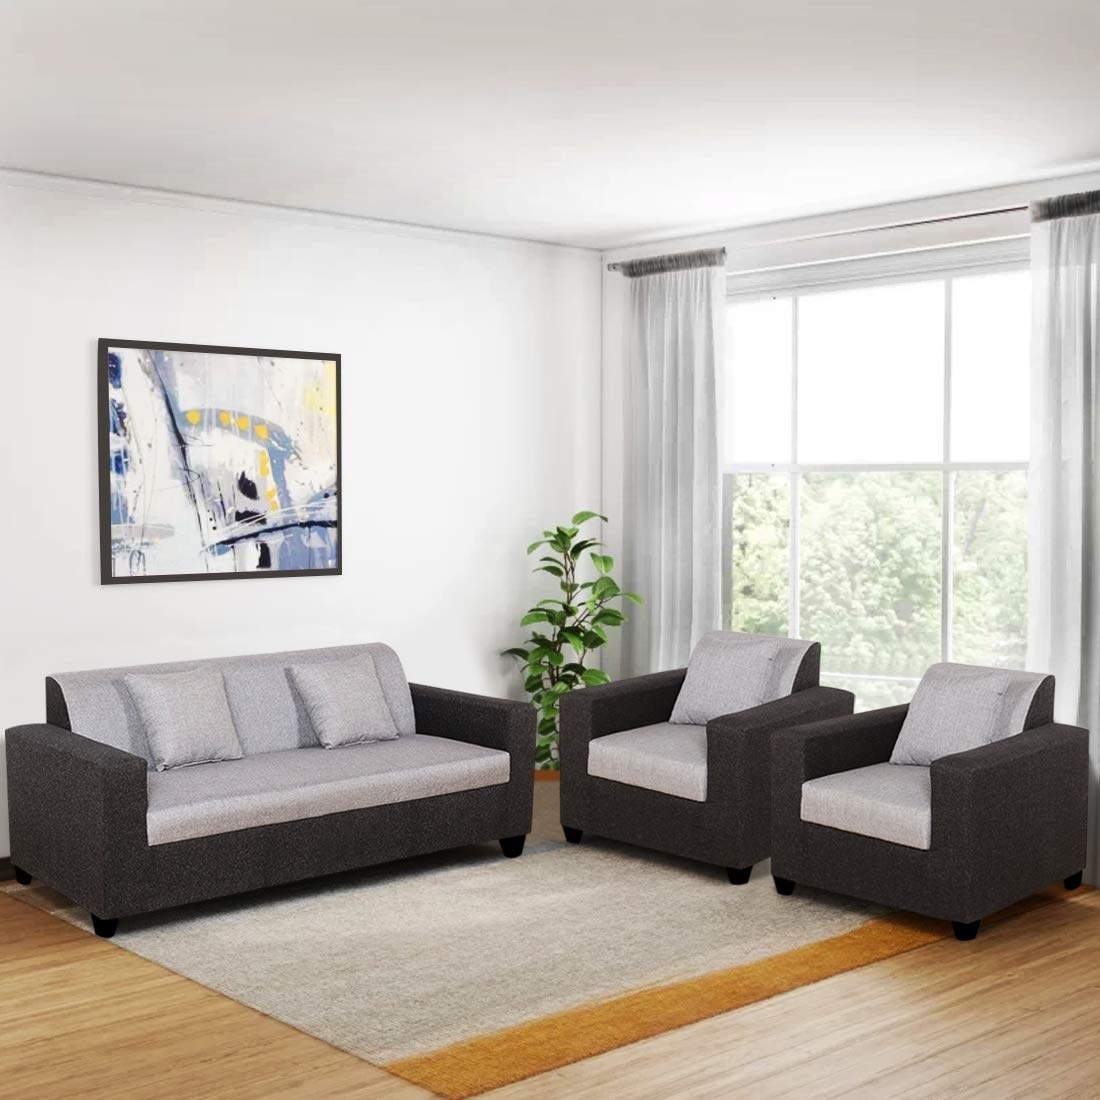 A sofa set 